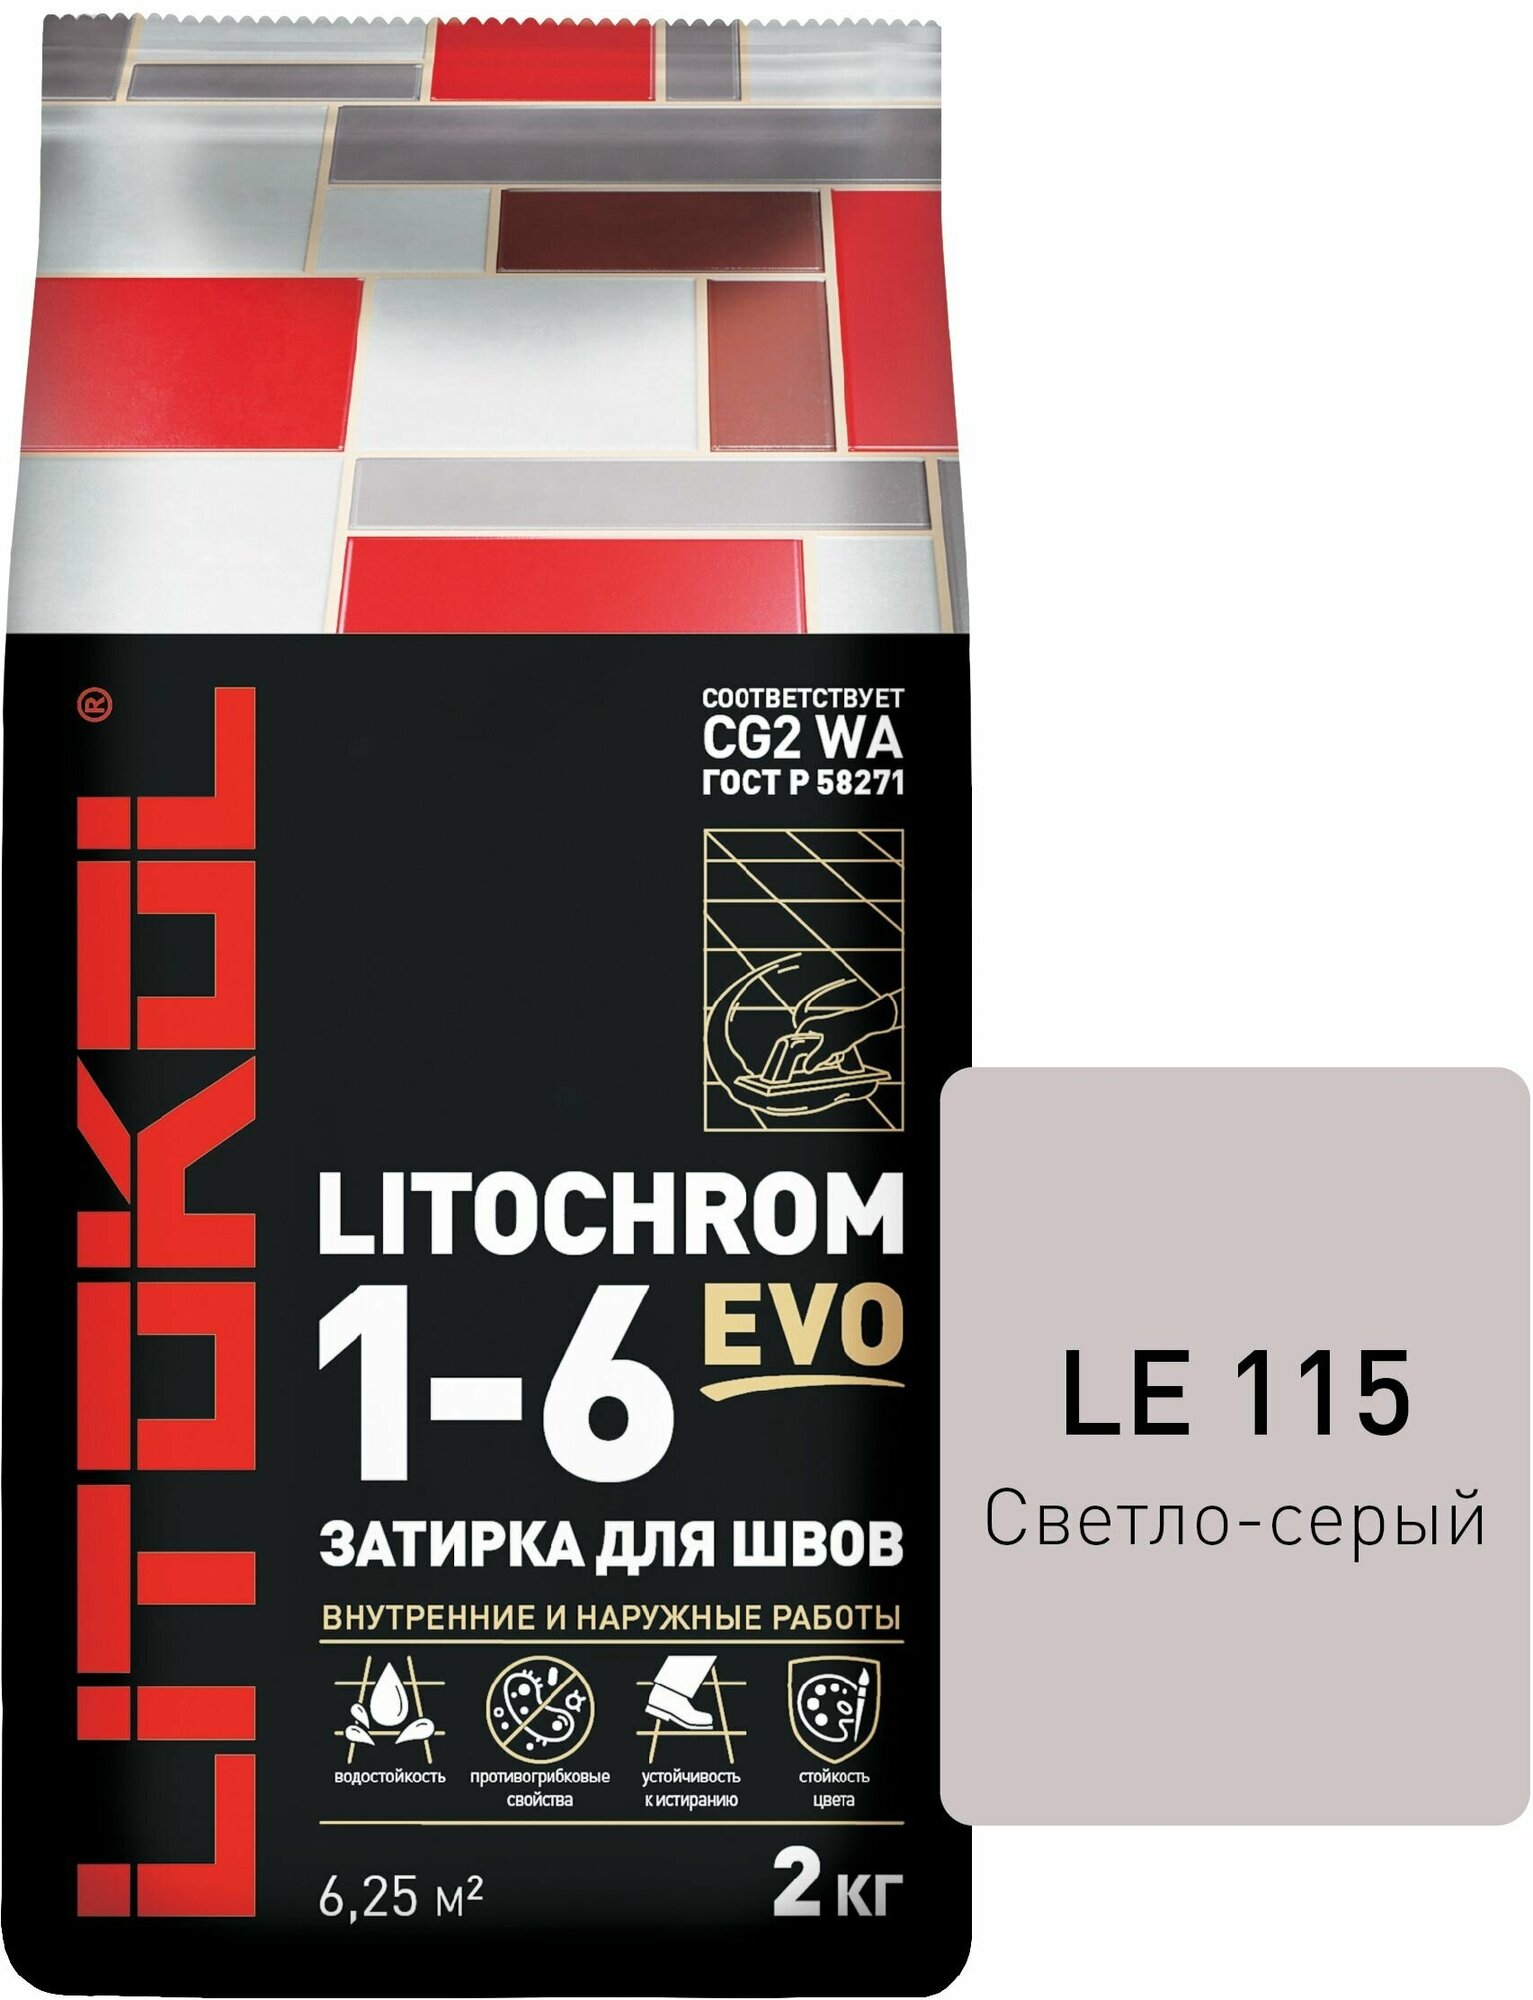 Затирка LITOCHROM 1-6 EVO с противогрибковыми свойствами LE.115 светло-серый 2 кг